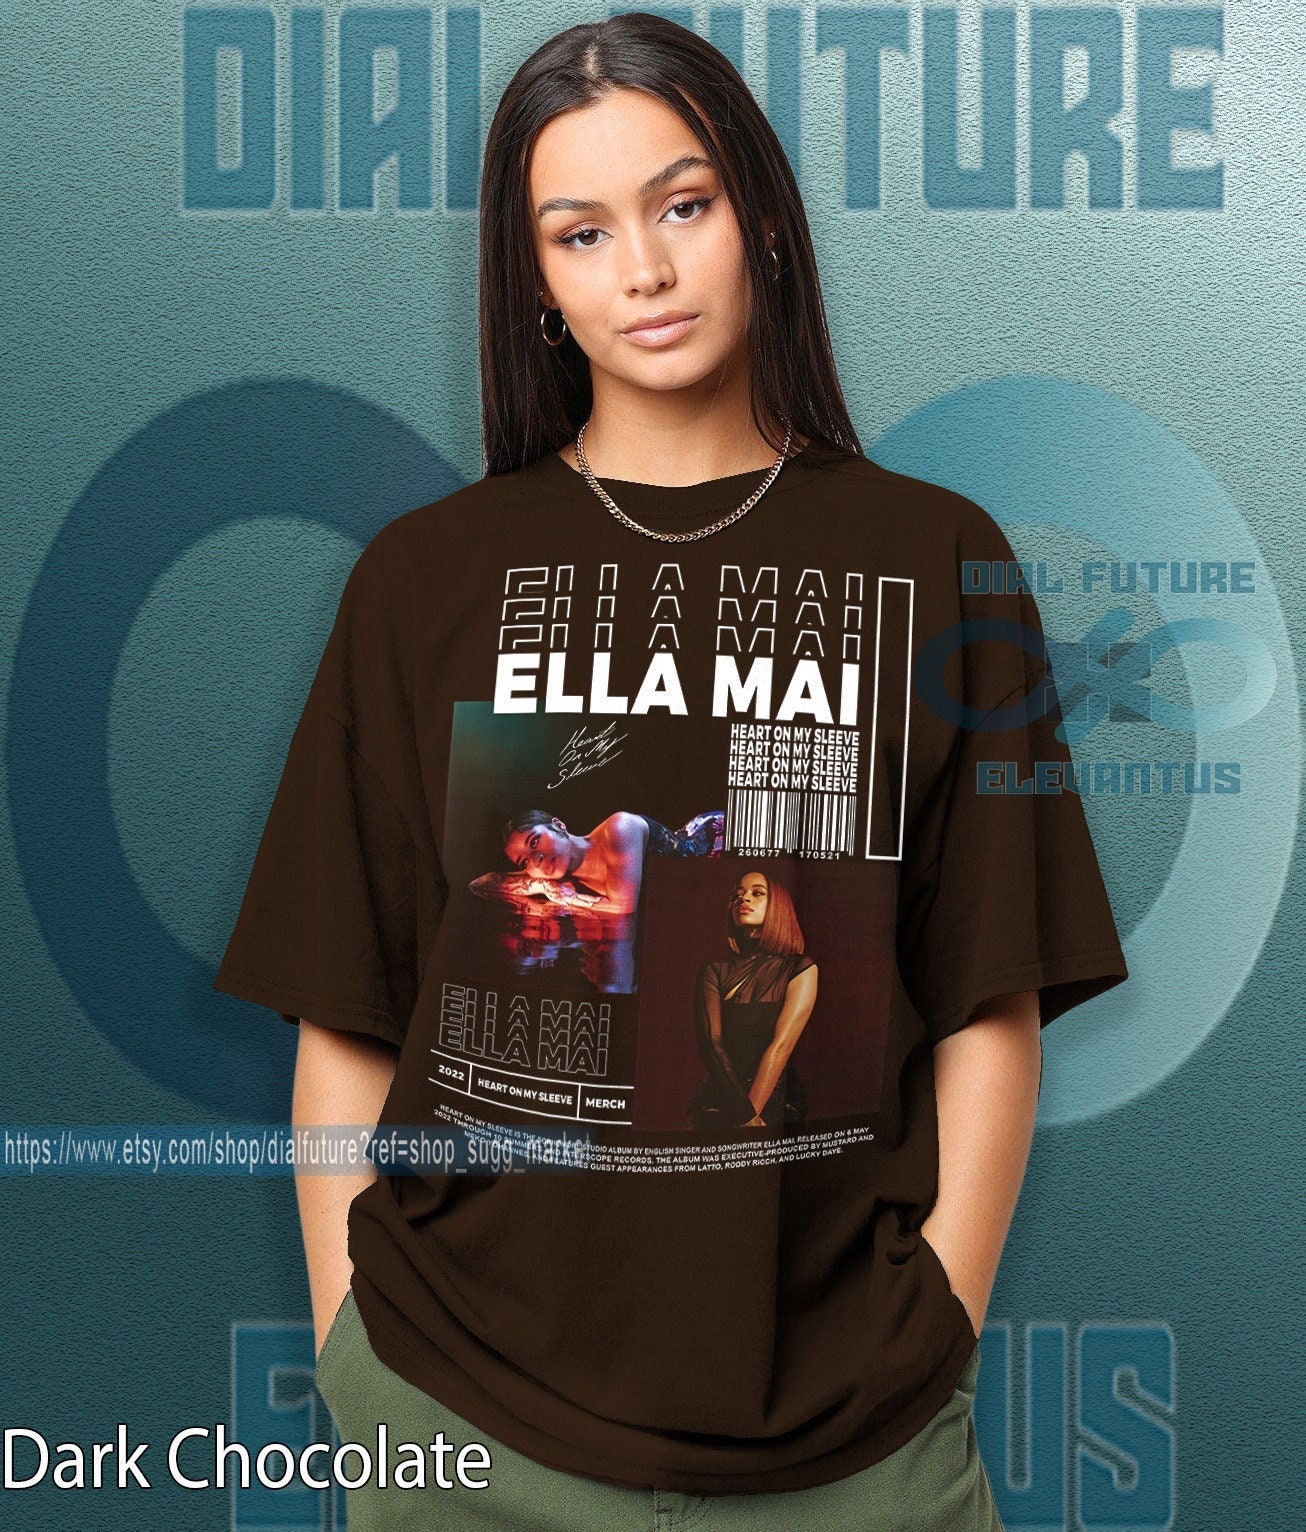 LOUISIANA HIP HOP LICENSE PLATE VINTAGE T-Shirt – Rhyme Life Apparel